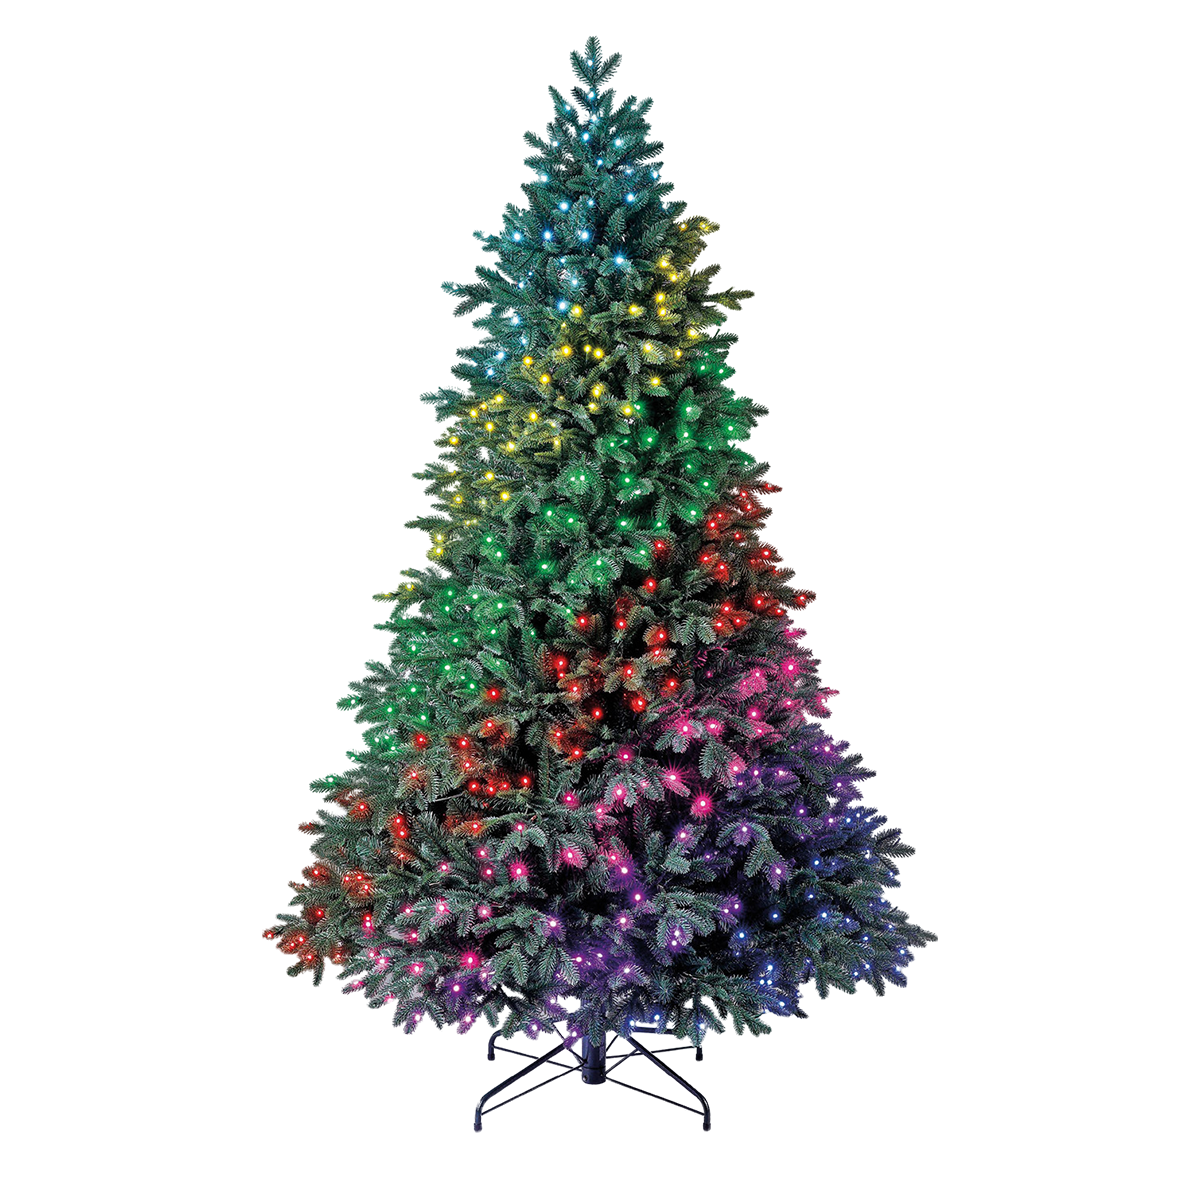 Vernon spar voorverlichte boom (editie Multicolor)